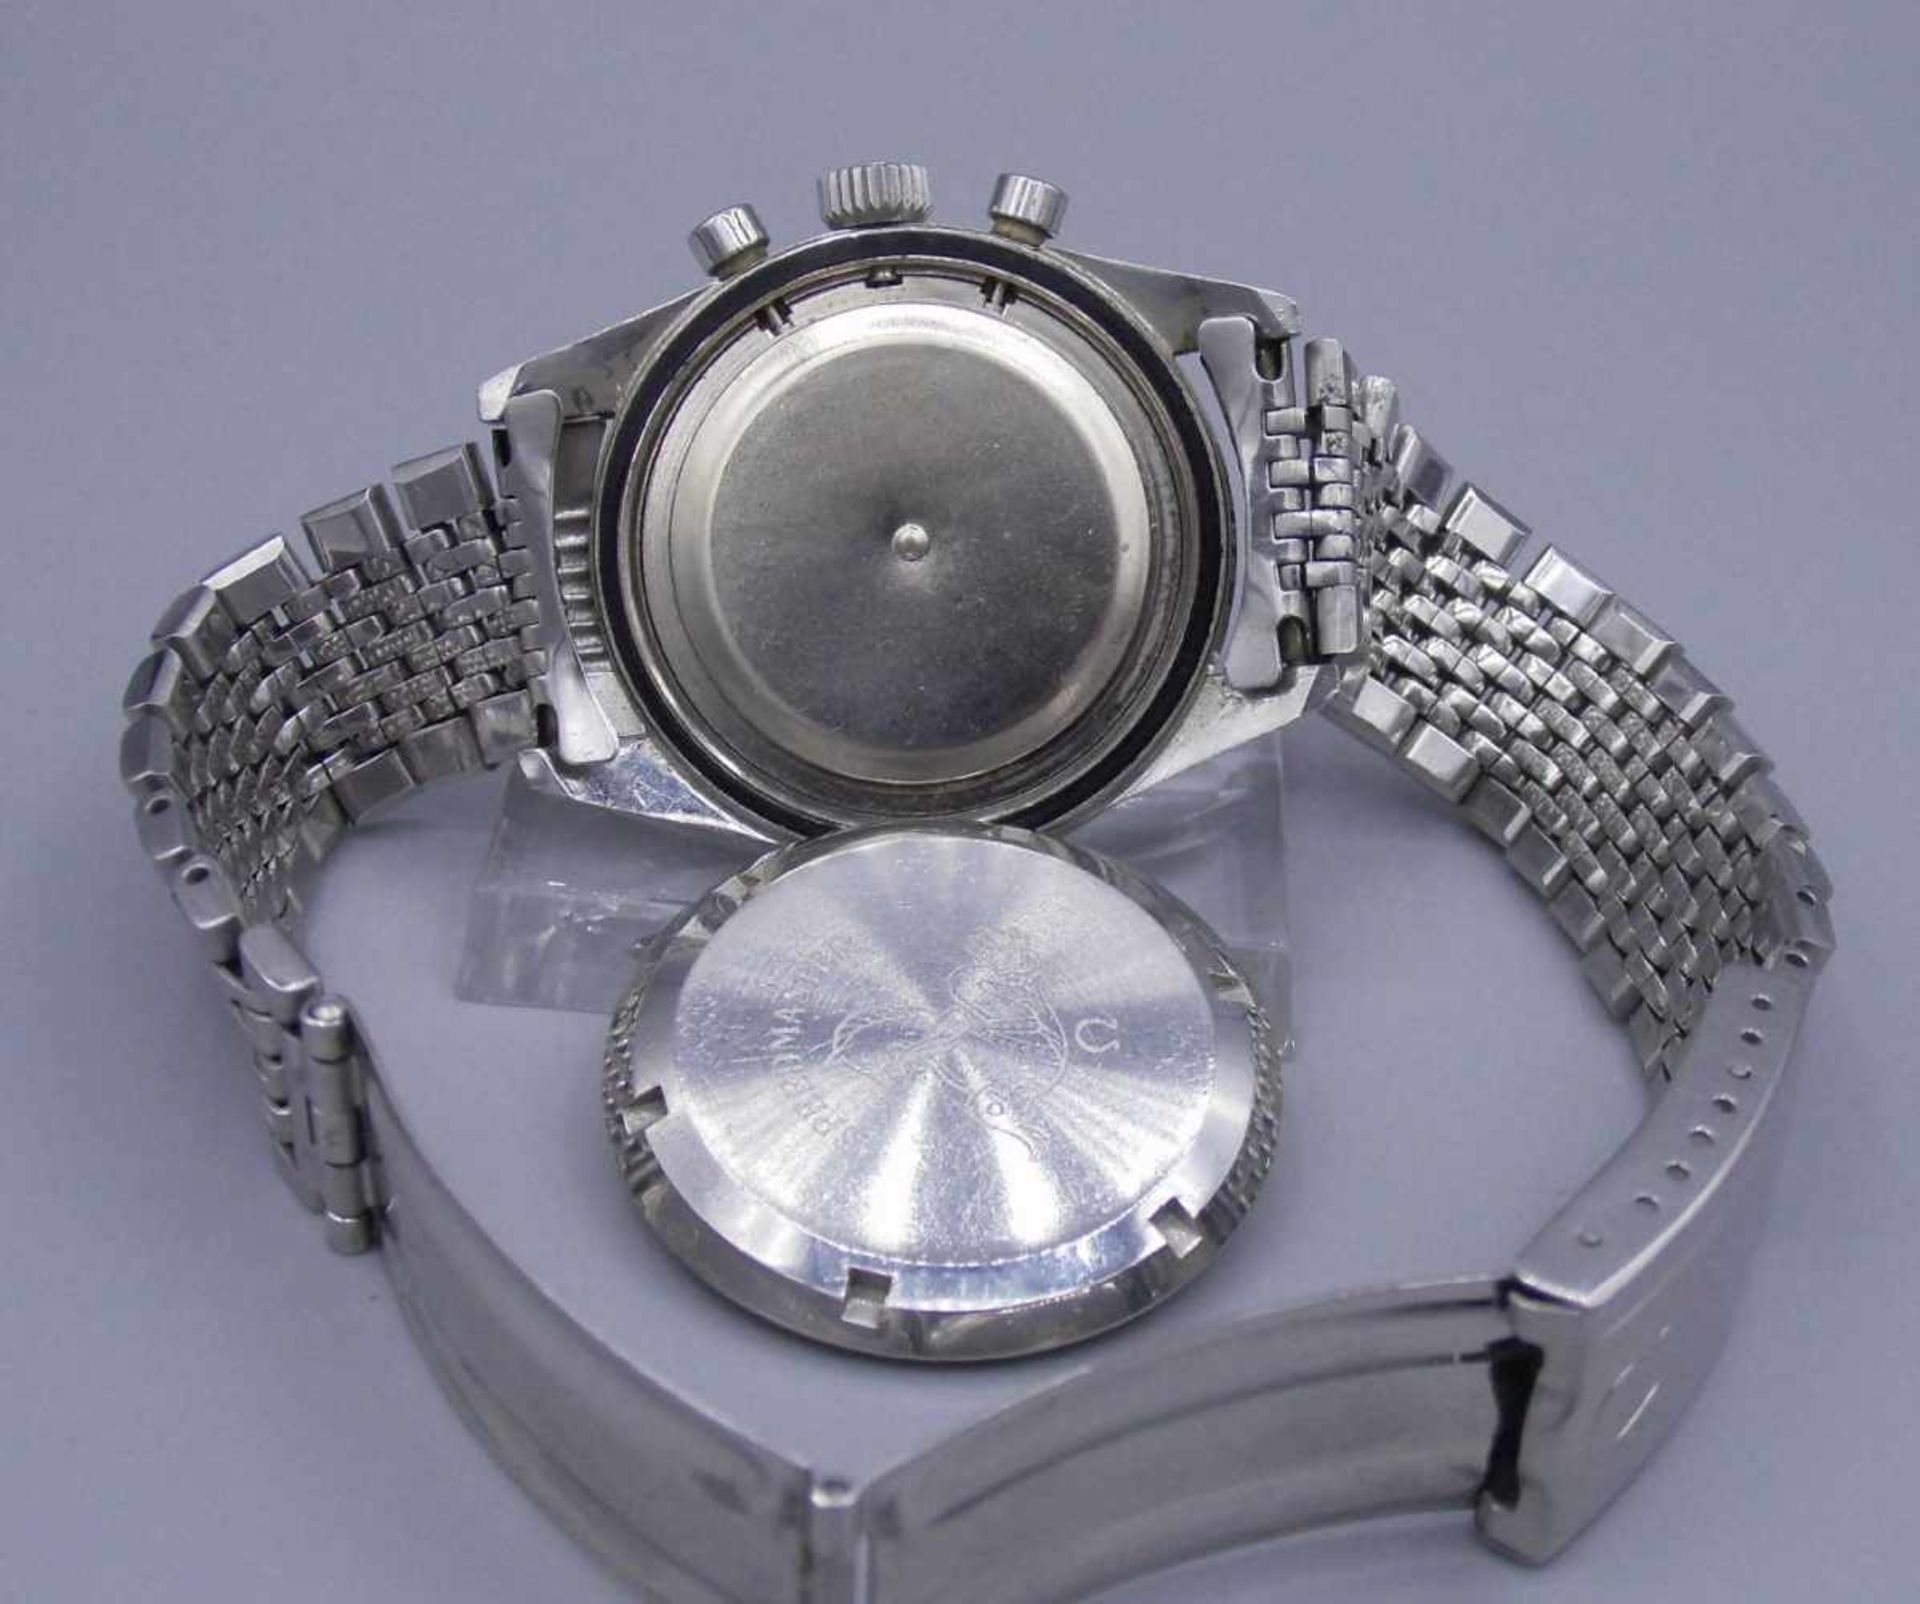 VINTAGE ARMBANDUHR / CHRONOGRAPH - Omega Speedmaster / wristwatch, Handaufzug, 1960er Jahre ( - Image 13 of 13